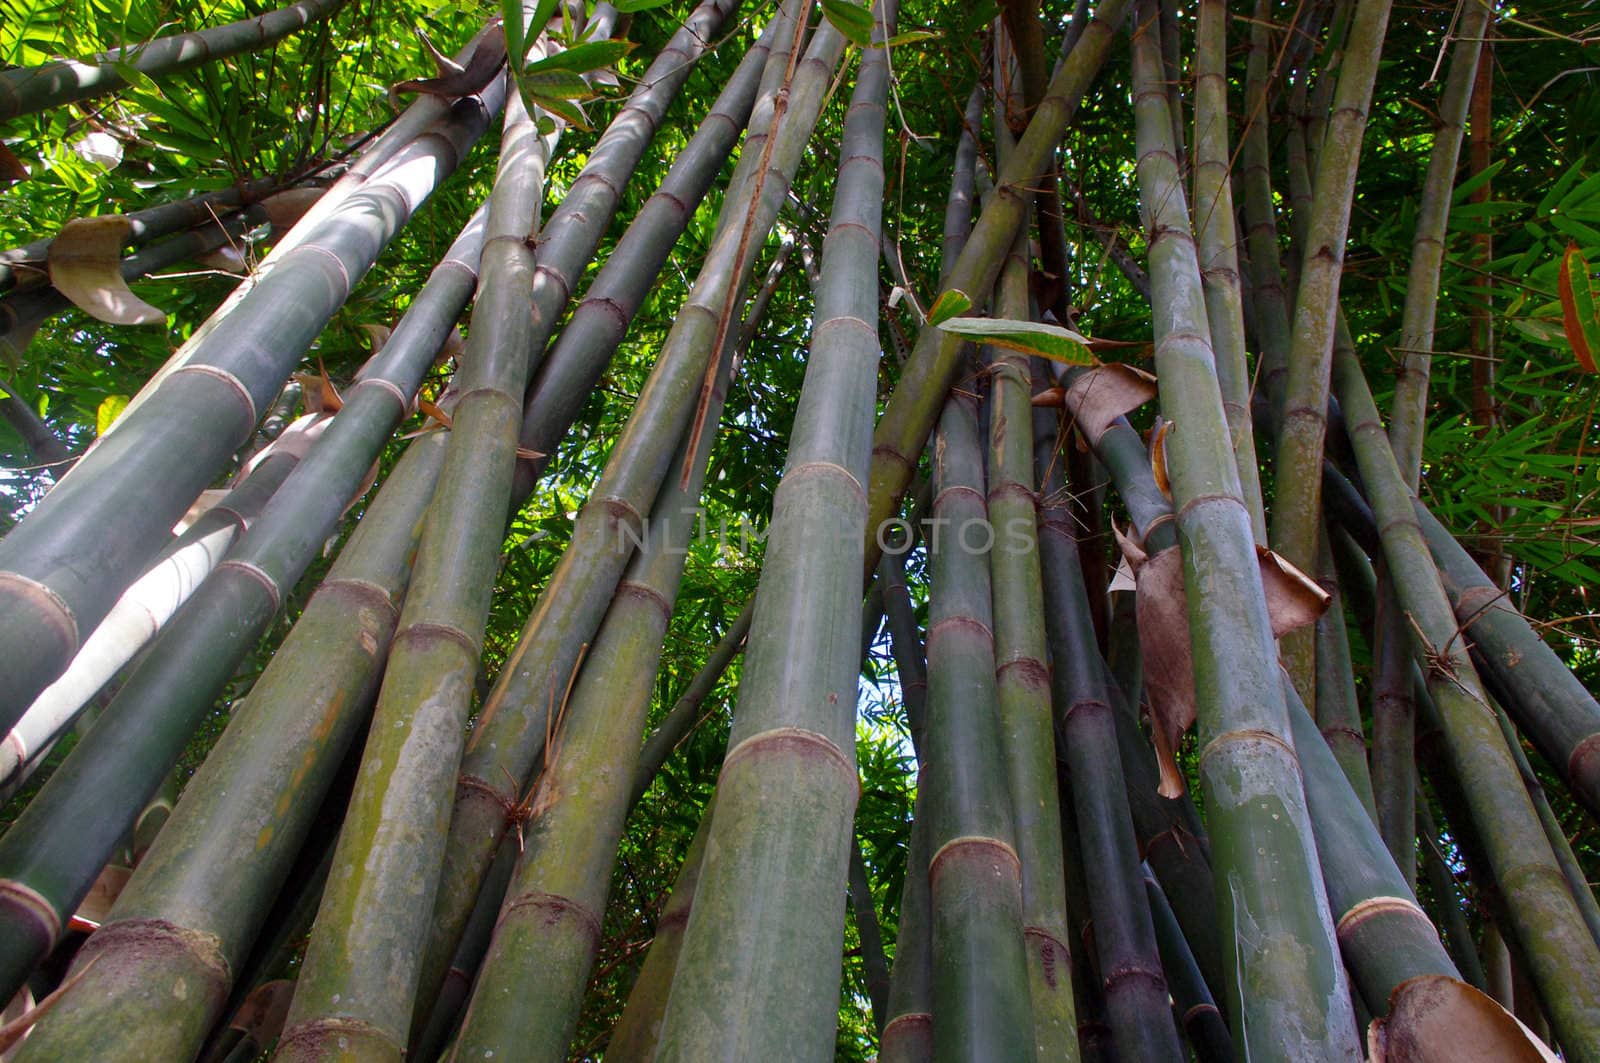 Bamboo trees growing in the tropics, Bali, Indonesia.